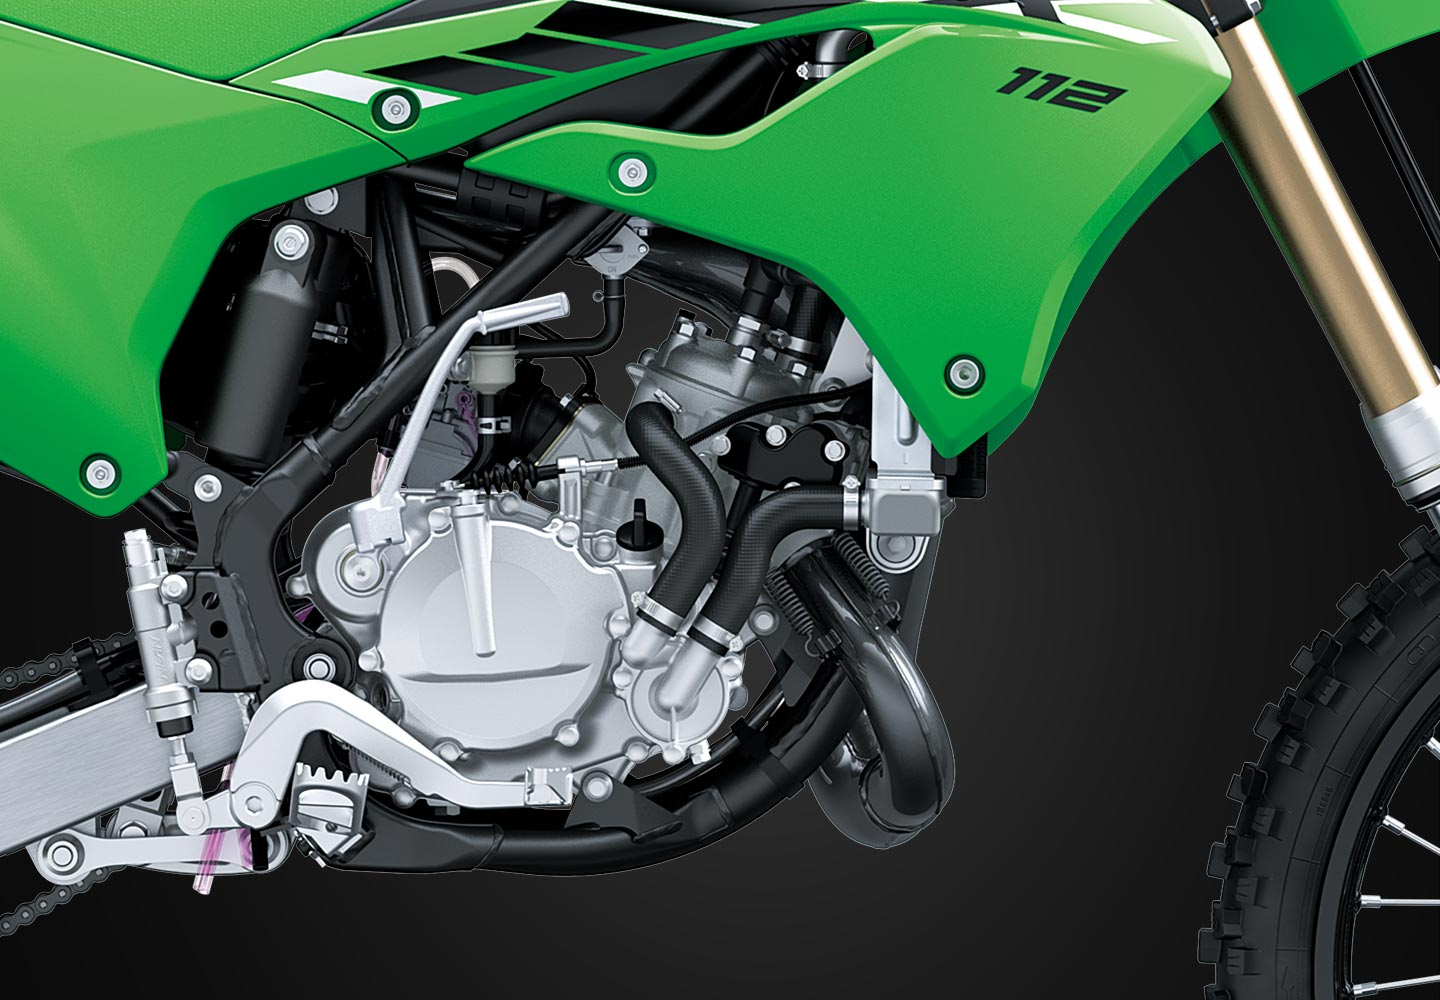 Kawasaki KX™112 | Motocross Motorcycle | Durable & Powerful Dirt Bike